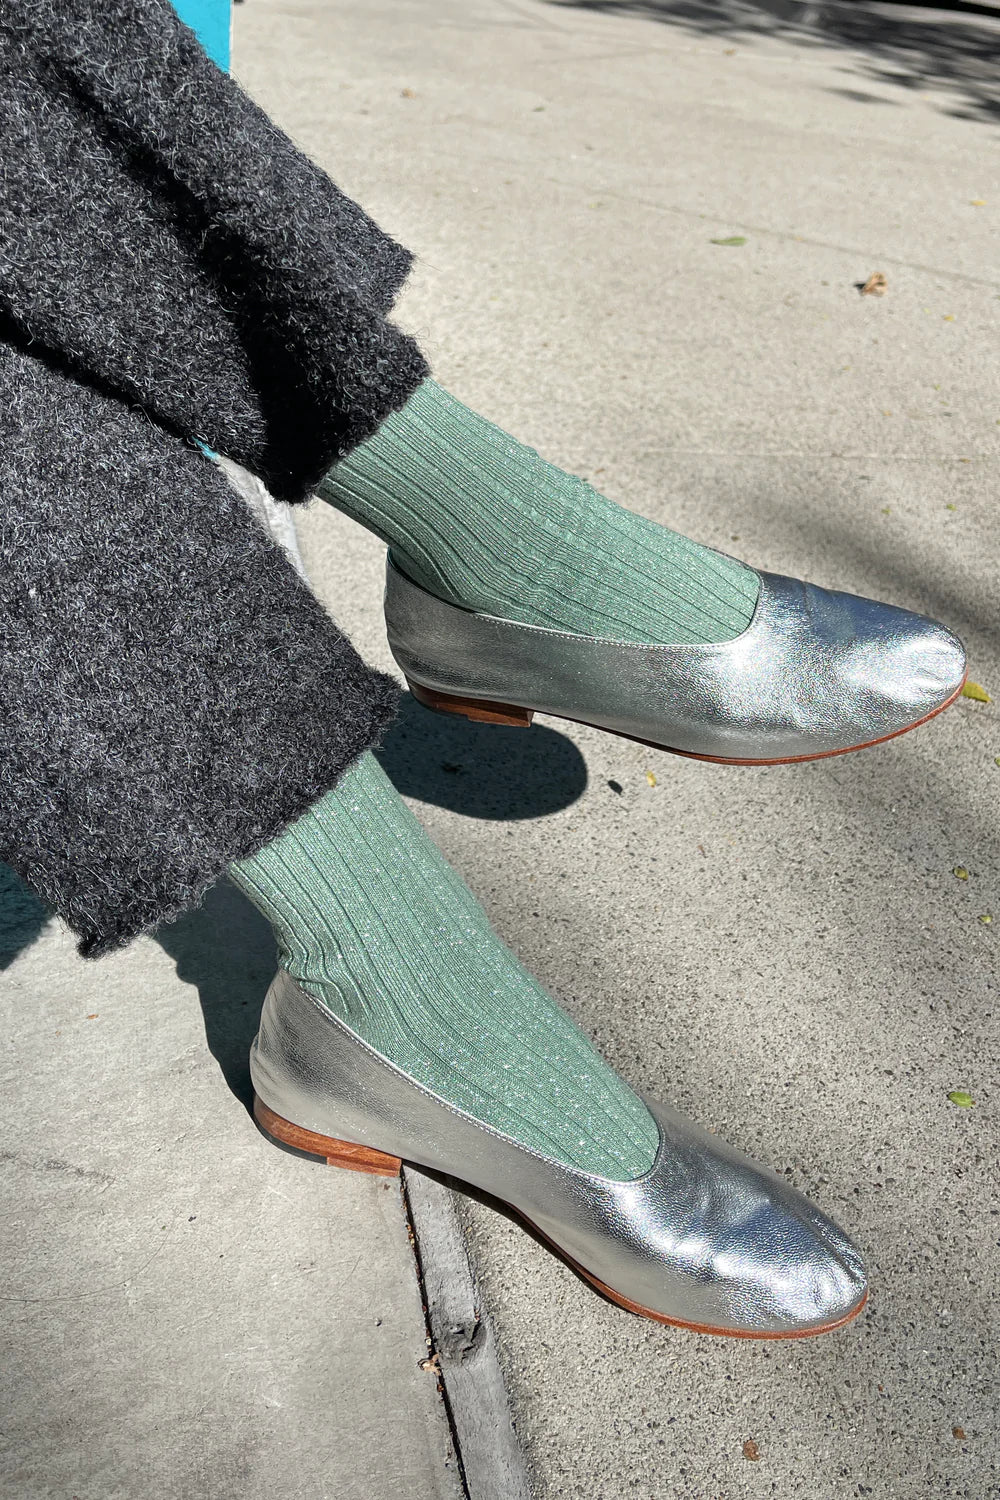 Le Bon Shoppe Her Socks Modal Lurex // Jade Glitter